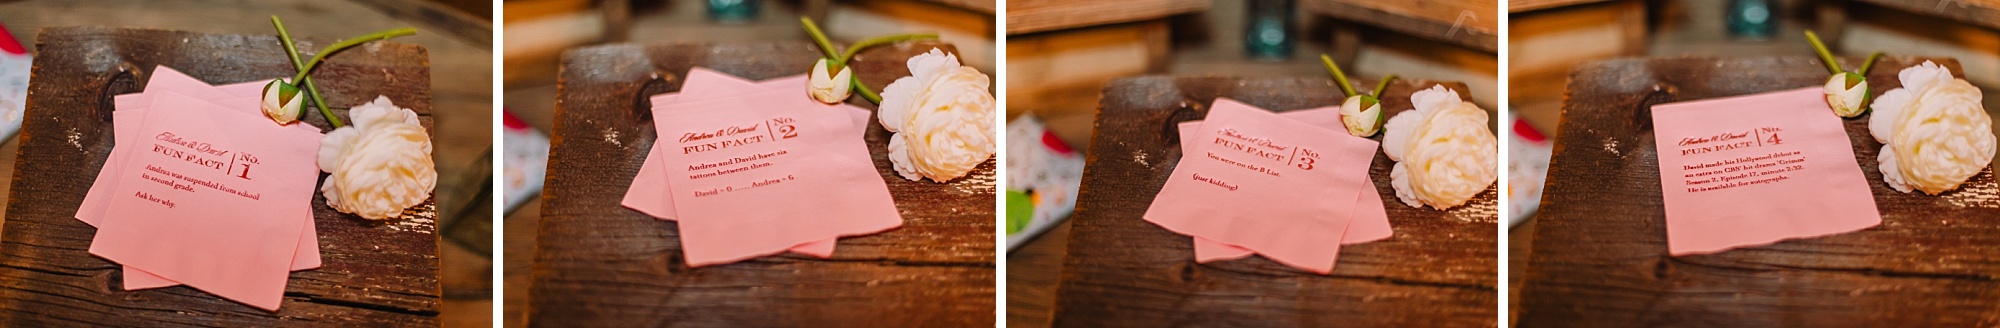 wedding-napkins-inspiration-unique-ideas